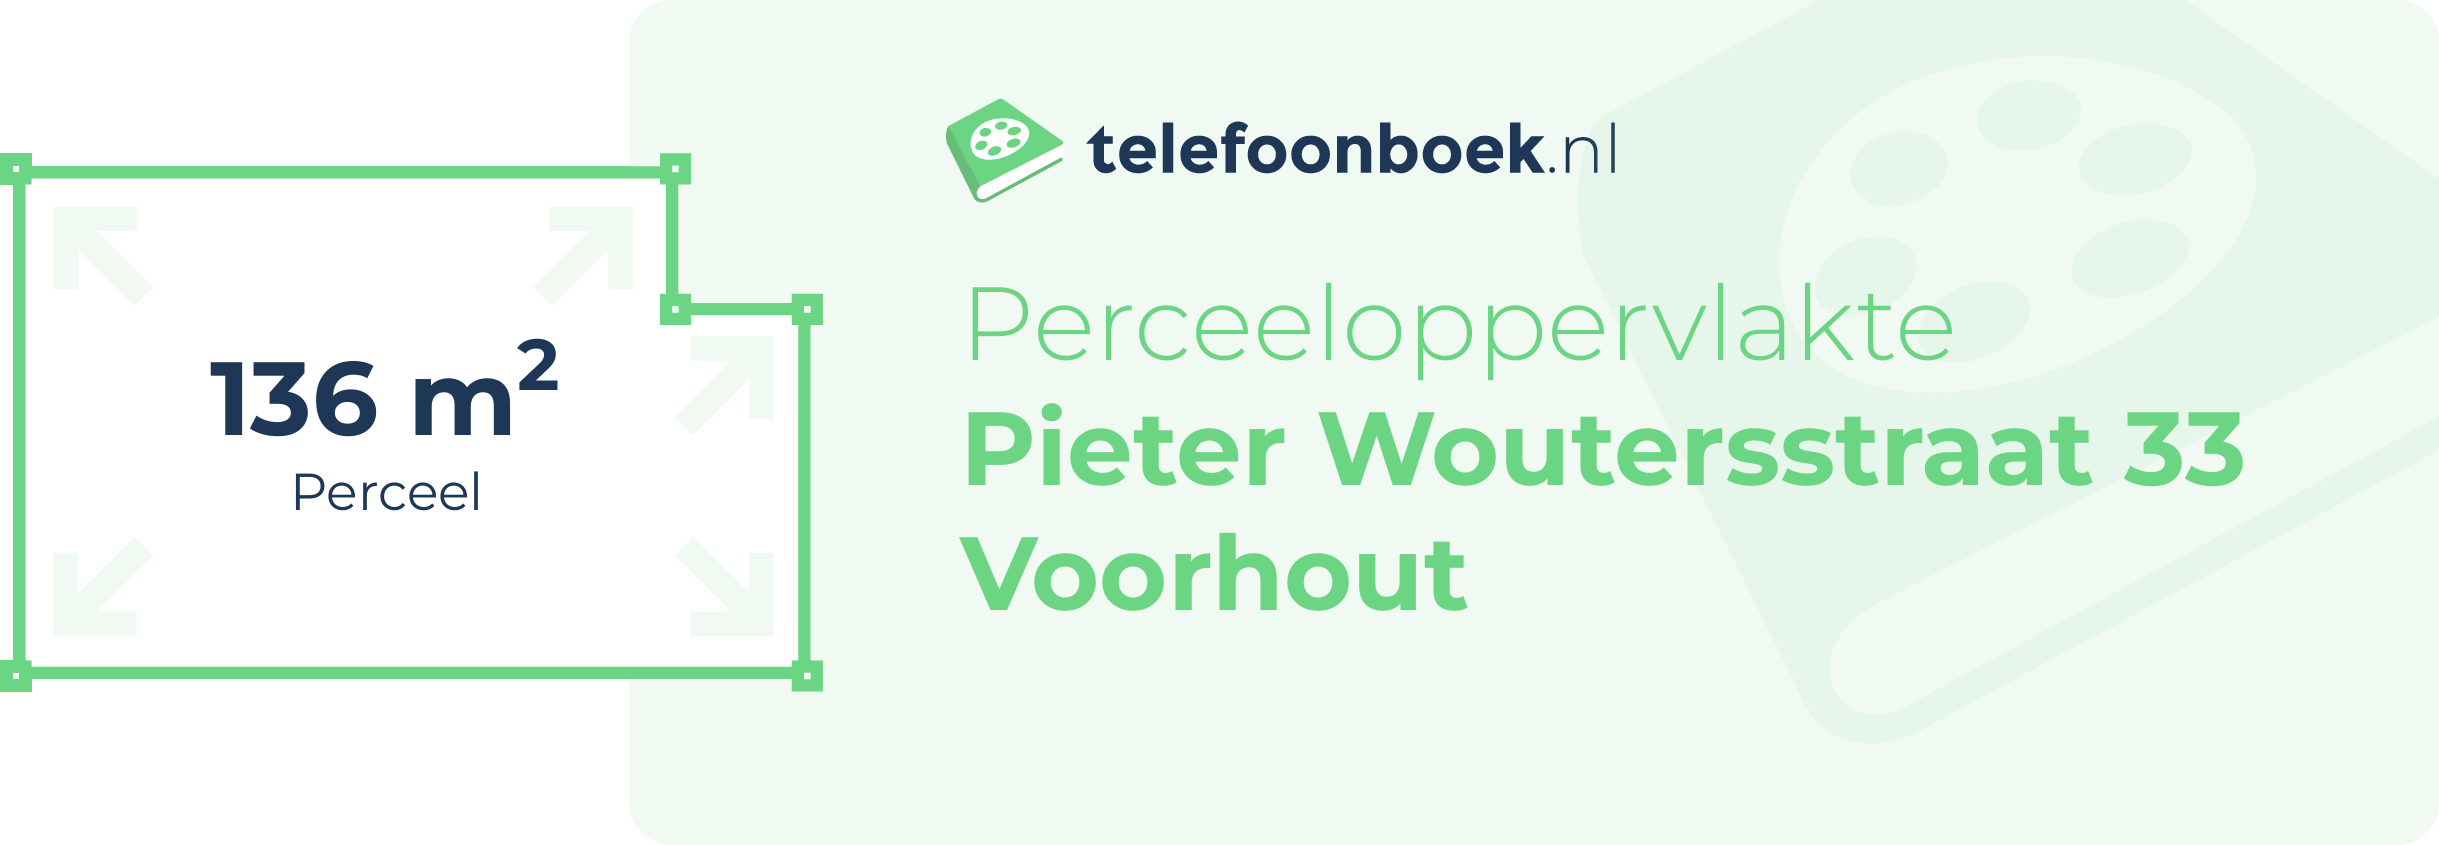 Perceeloppervlakte Pieter Woutersstraat 33 Voorhout